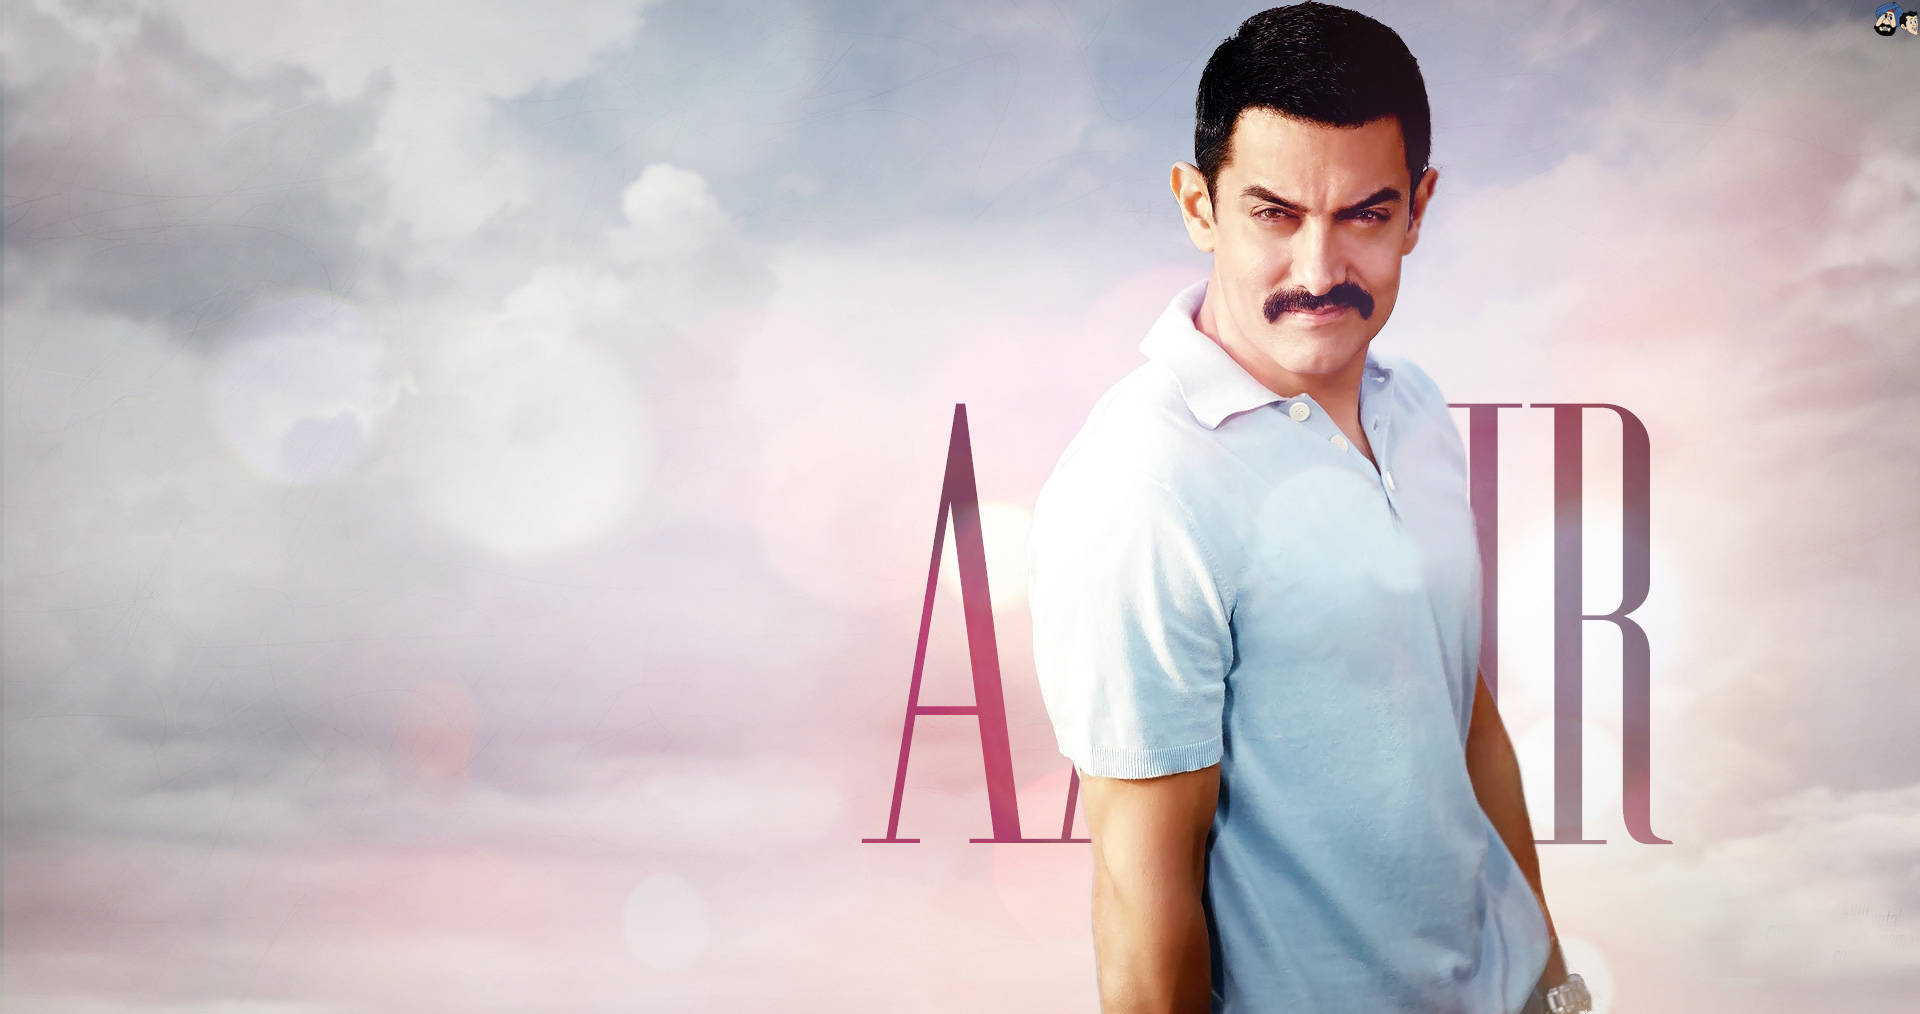 Aamirkhan, Megaestrella De Bollywood, Actor. Fondo de pantalla